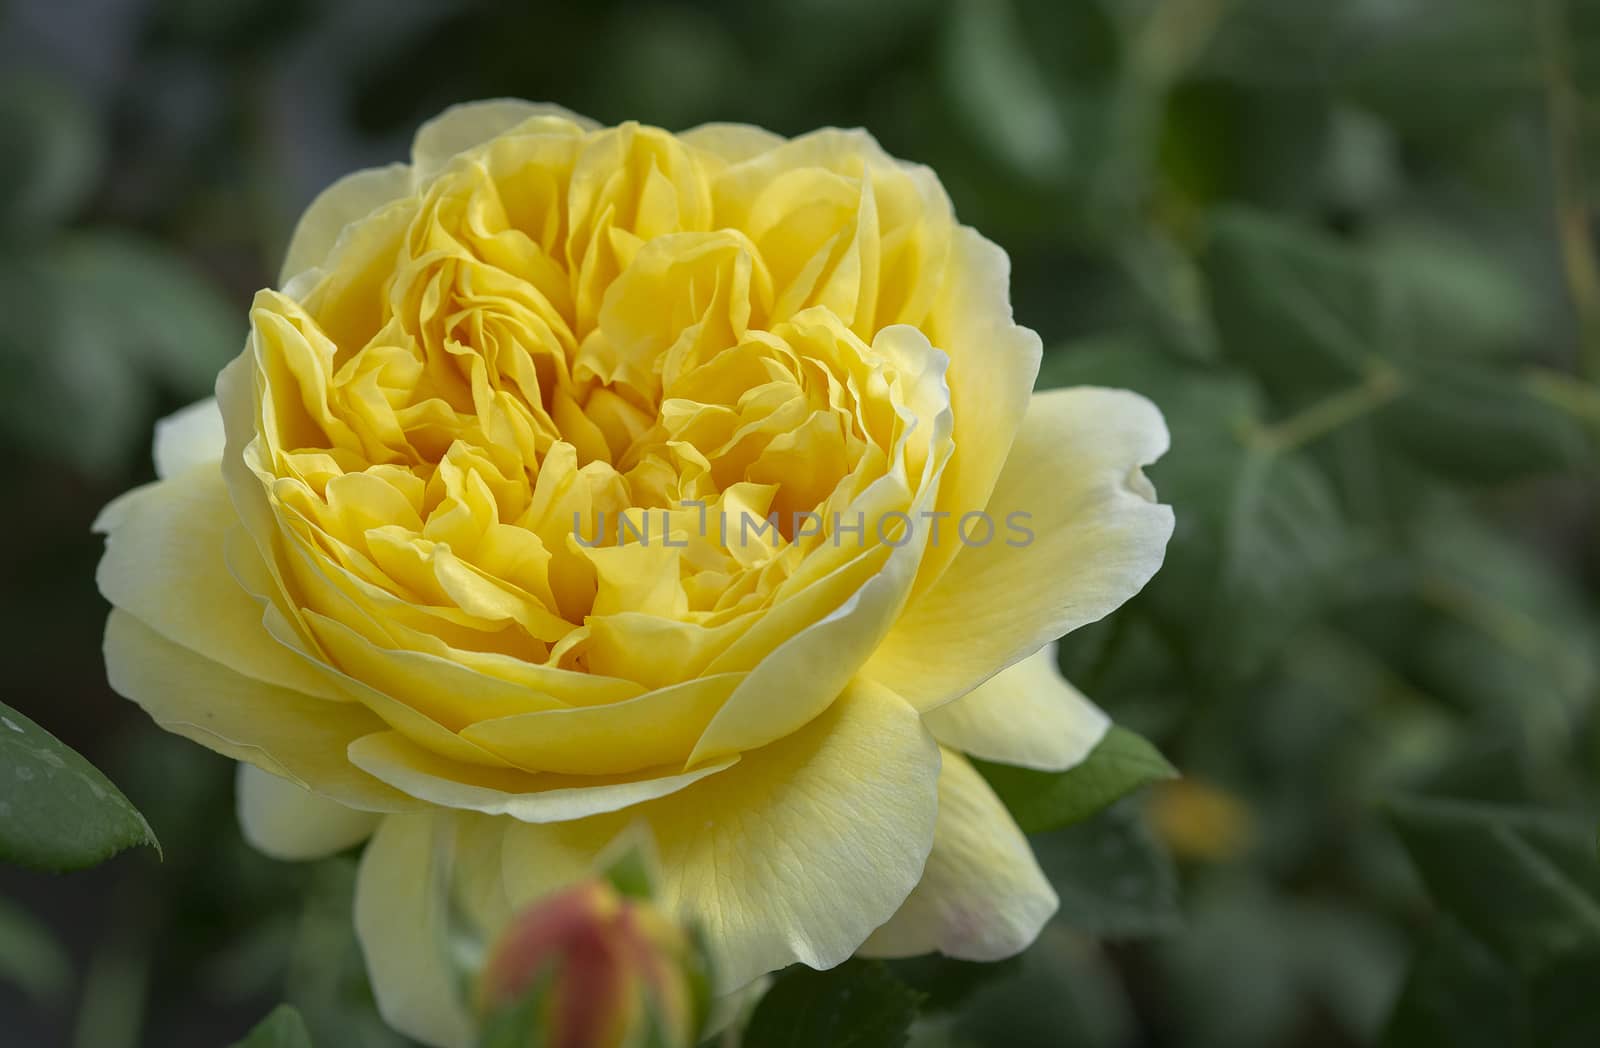 Beautiful yellow rose flowers closeup by ArtesiaWells